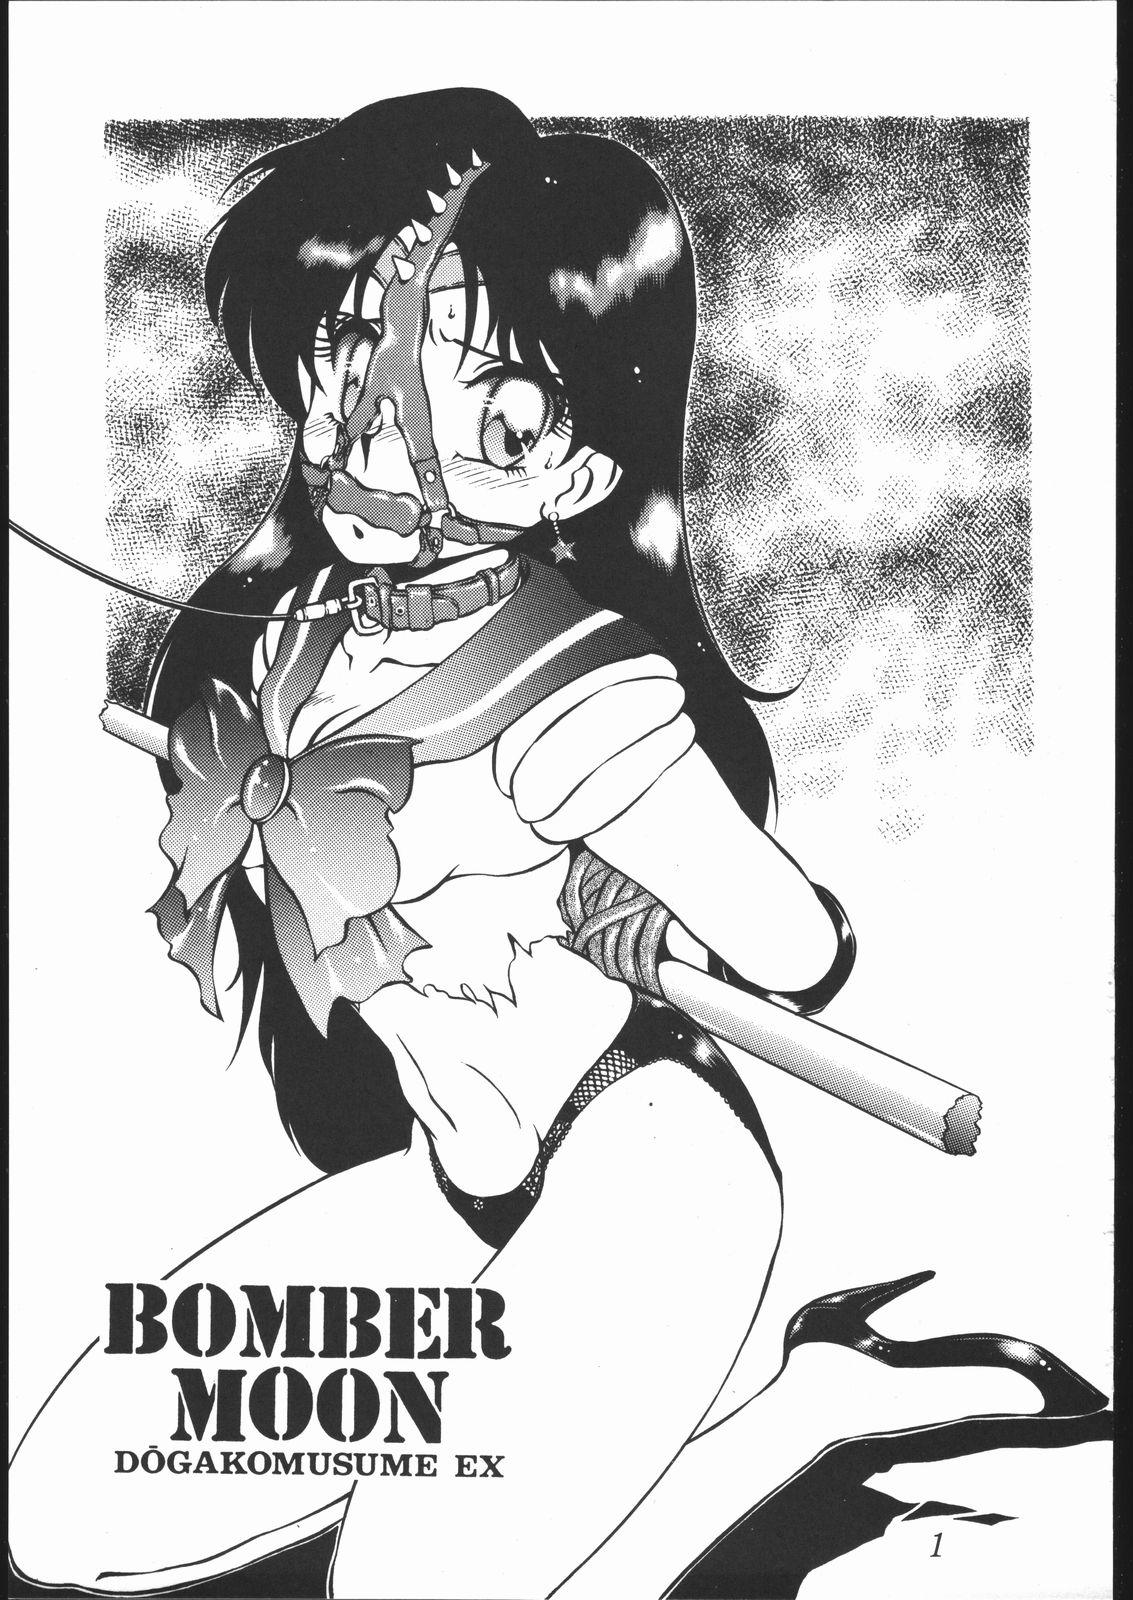 Tied DOGAKOMUSUME EX BOMBER MOON - Sailor moon Bizarre - Page 2